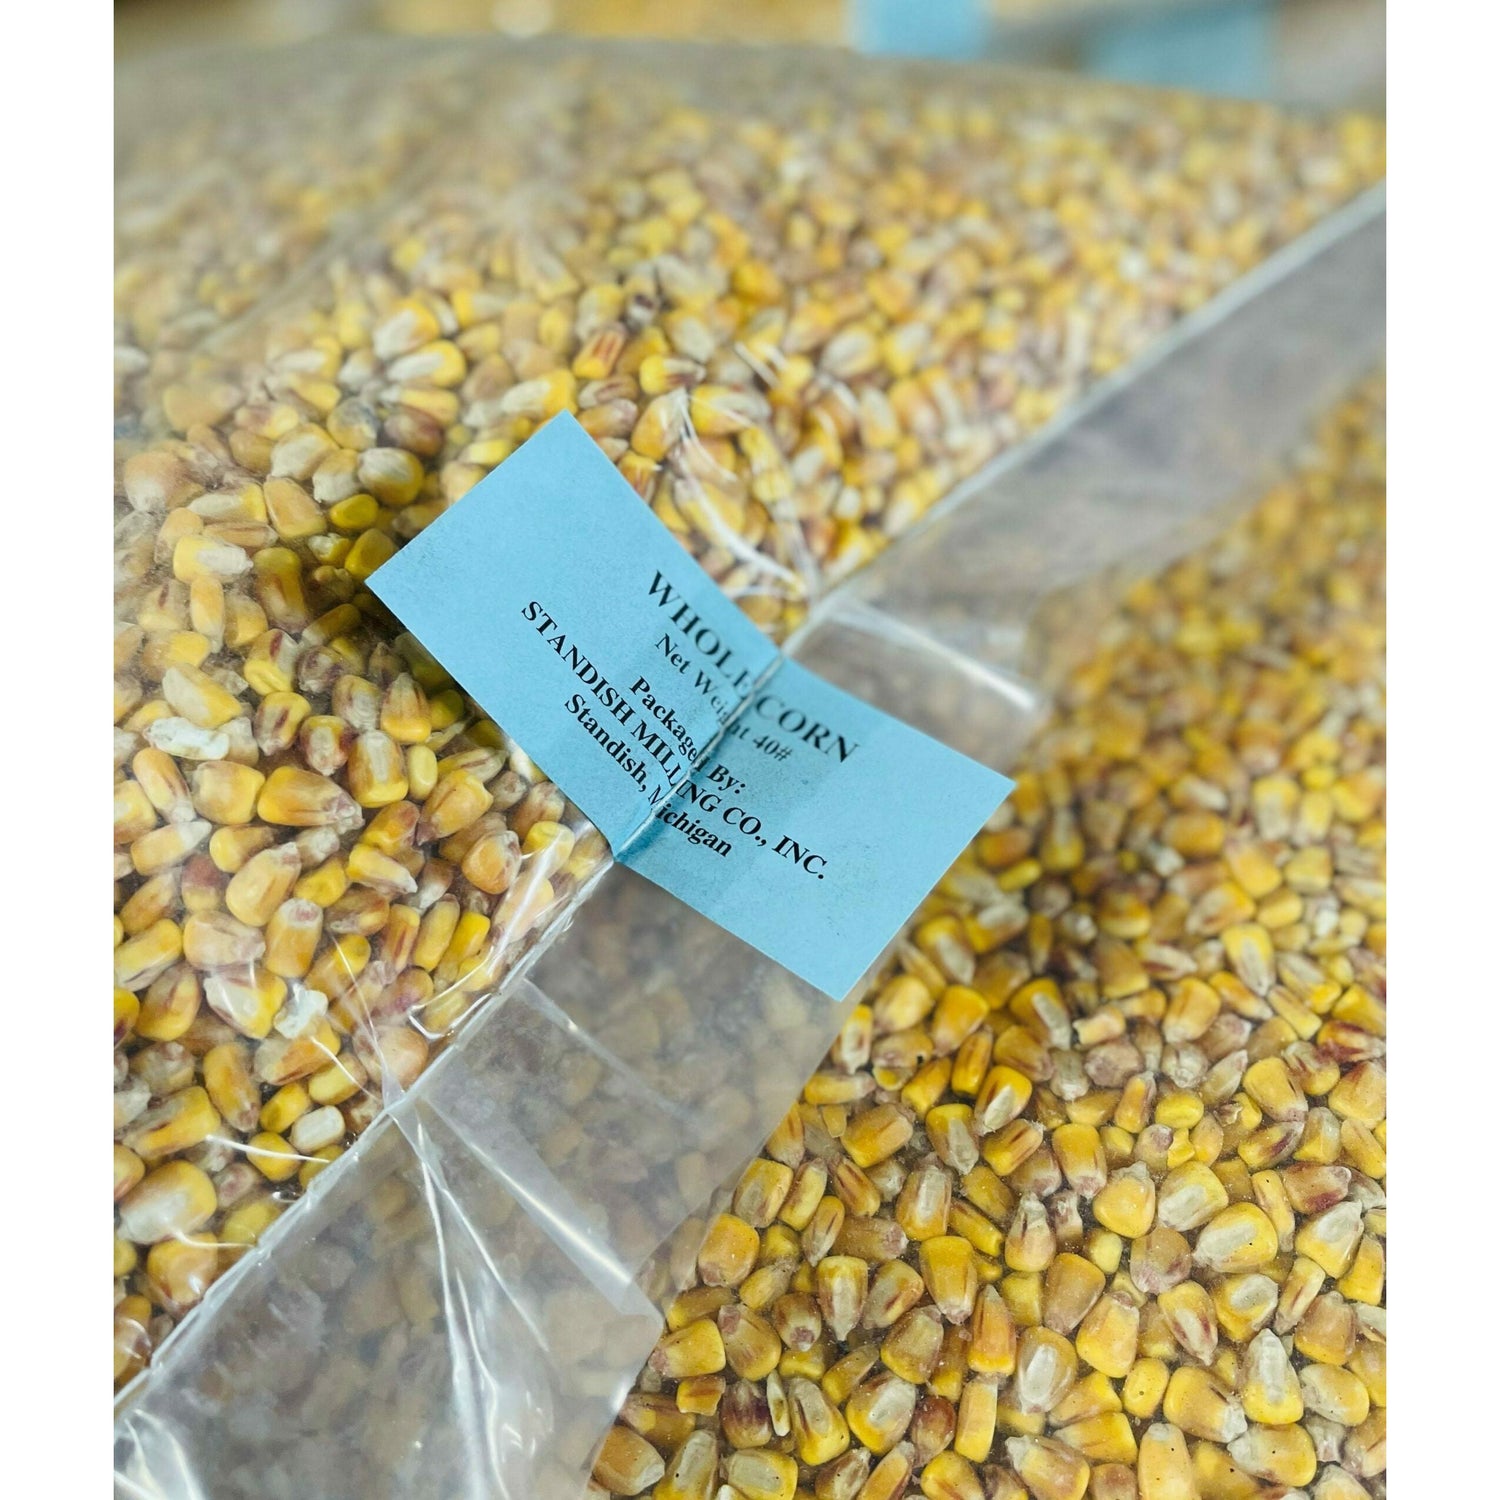 Country Road Premium Cracked Corn, 50 lb. Bag